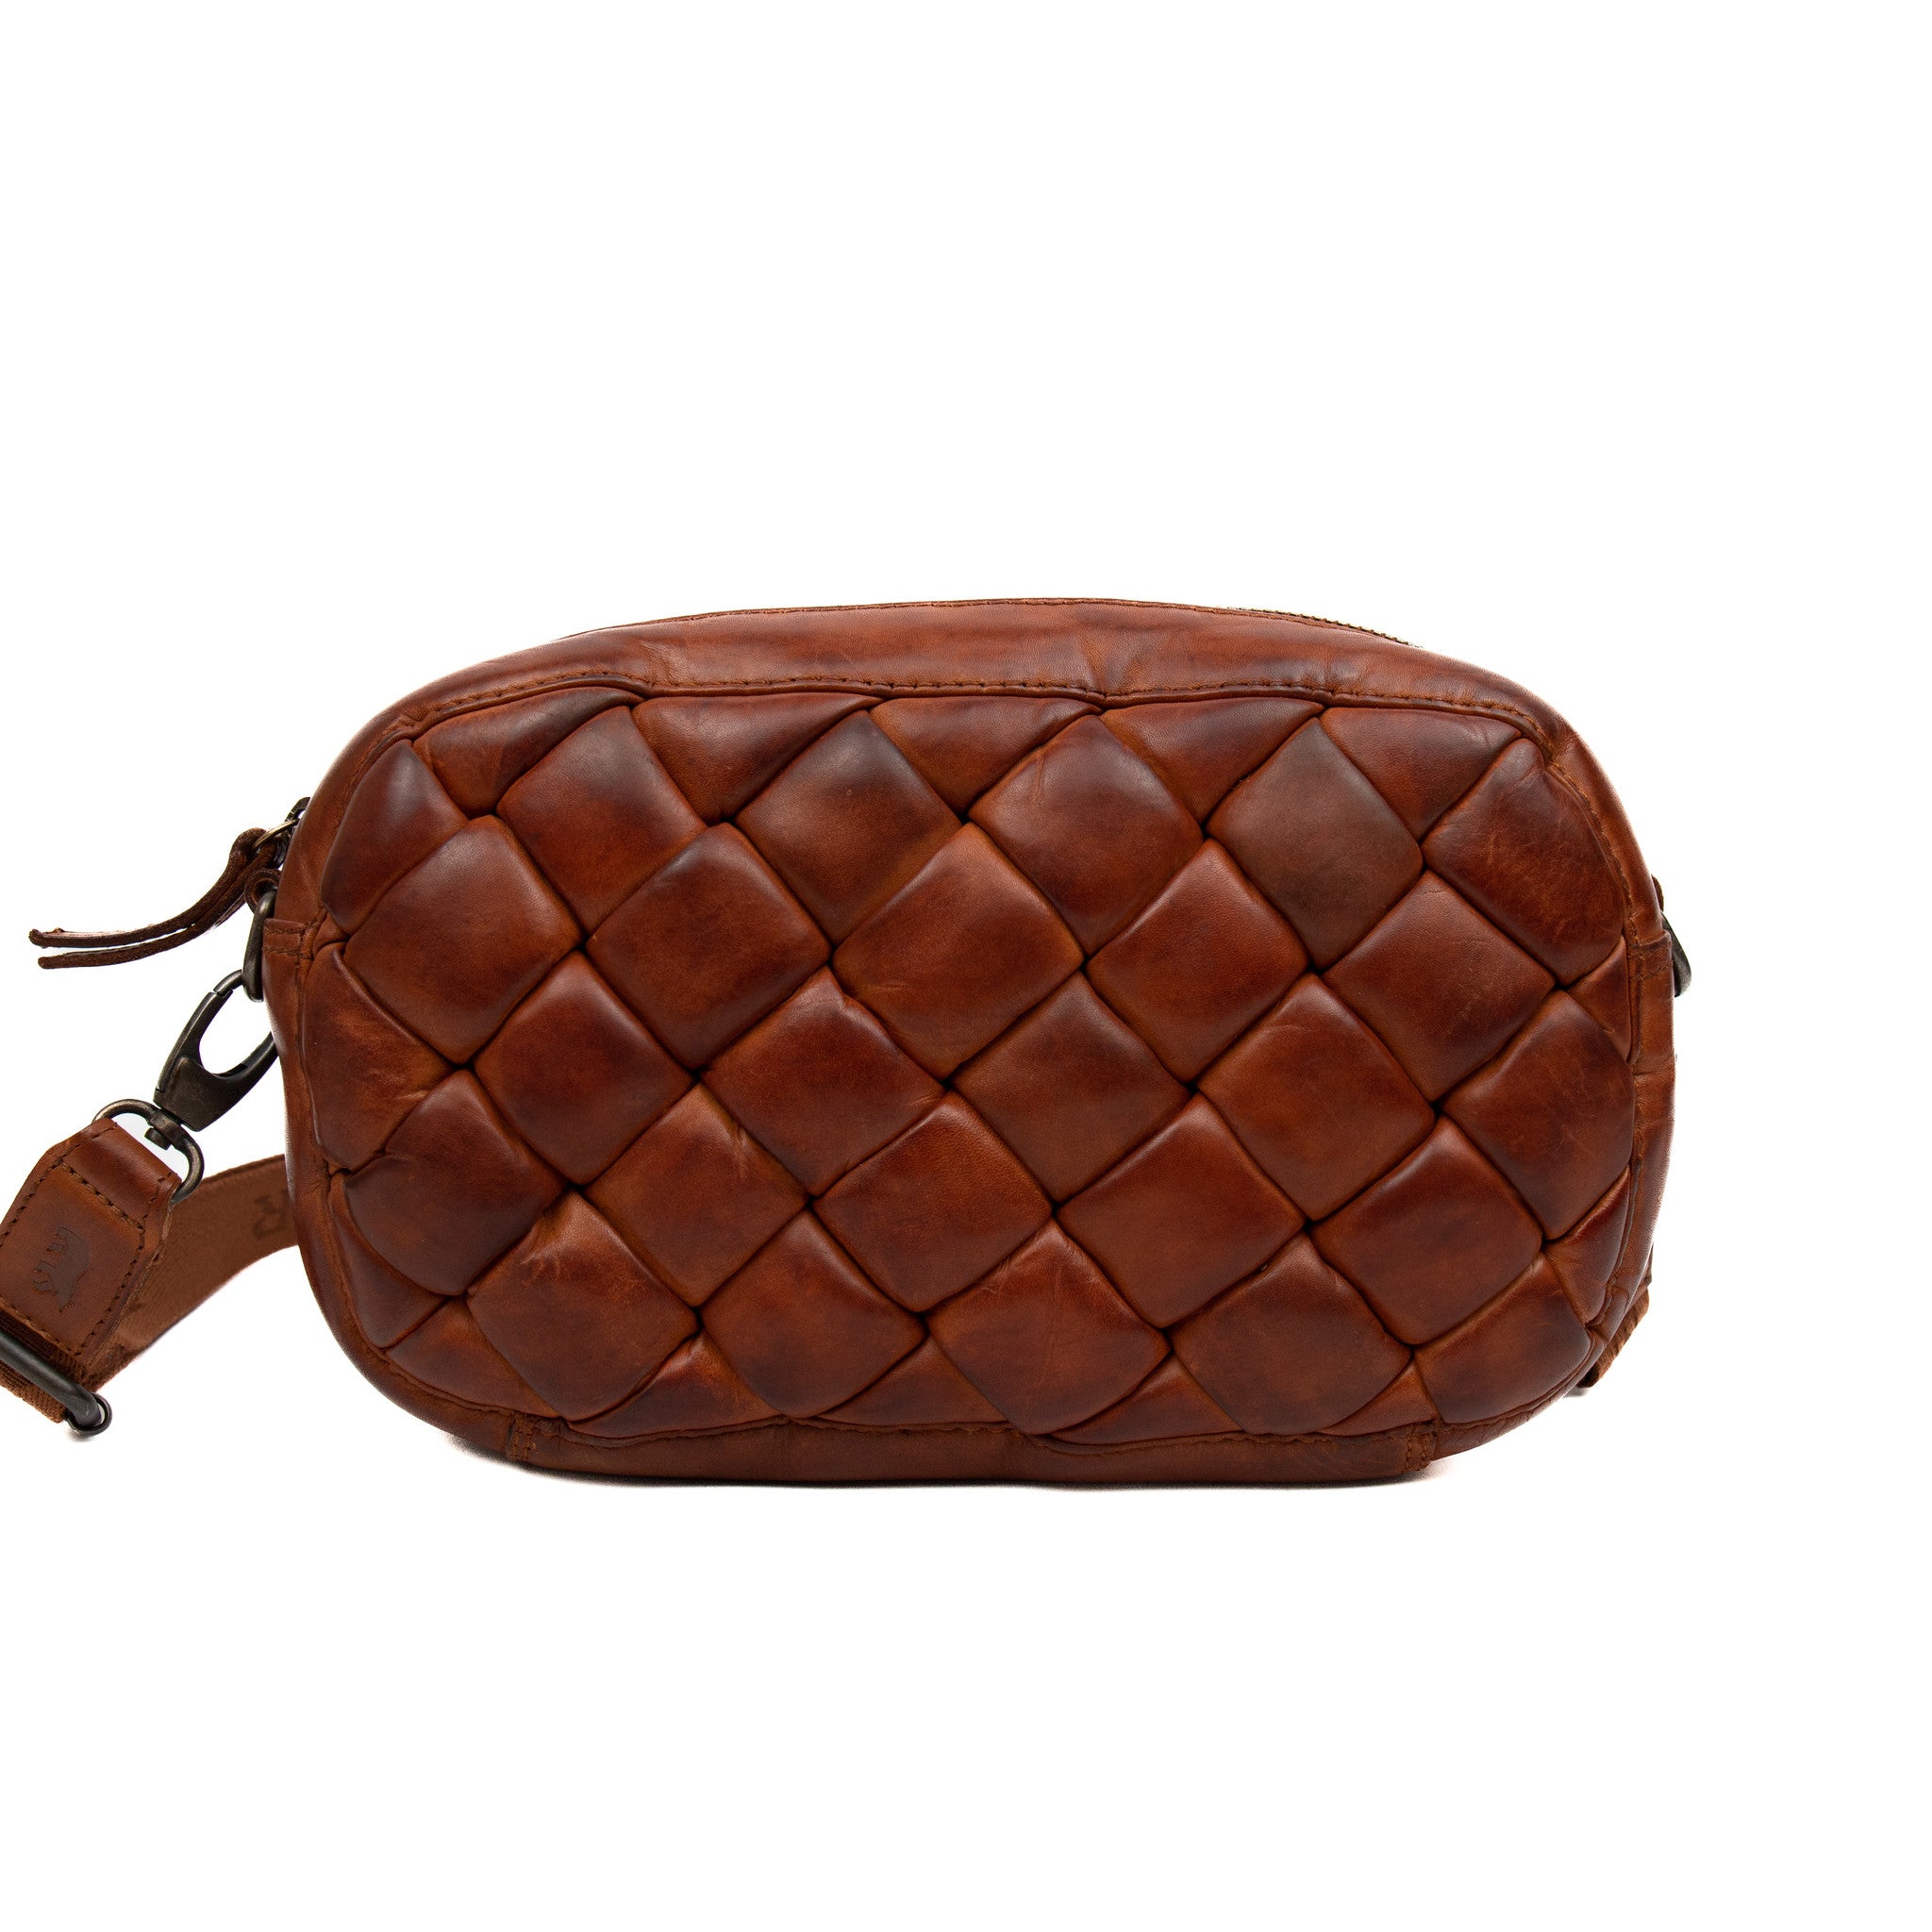 Braided shoulder bag 'Yuna' cognac - CL 42905